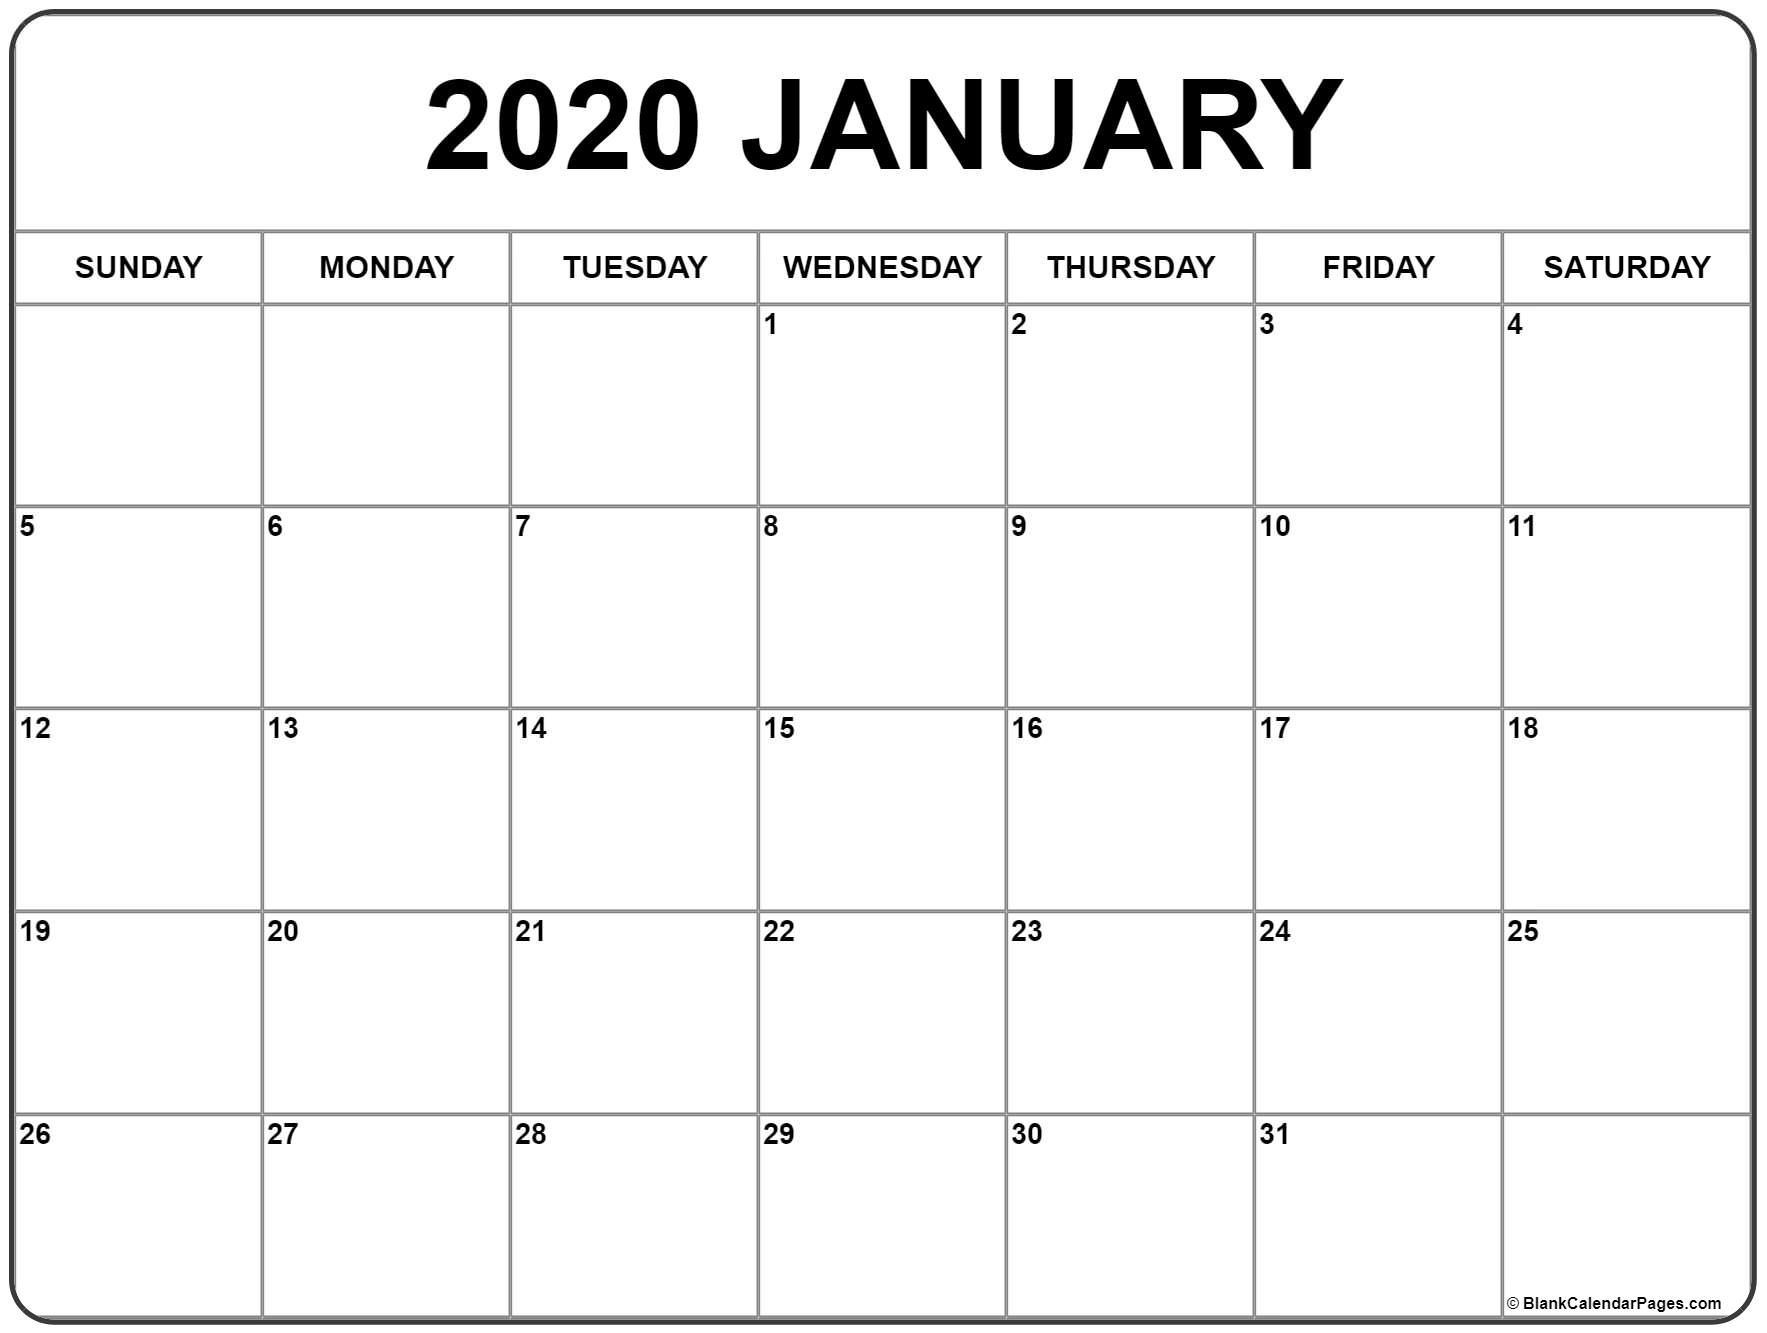 January 2020 Calendar | Free Printable Monthly Calendars-2020 Monthly Calendar Template August Thru December